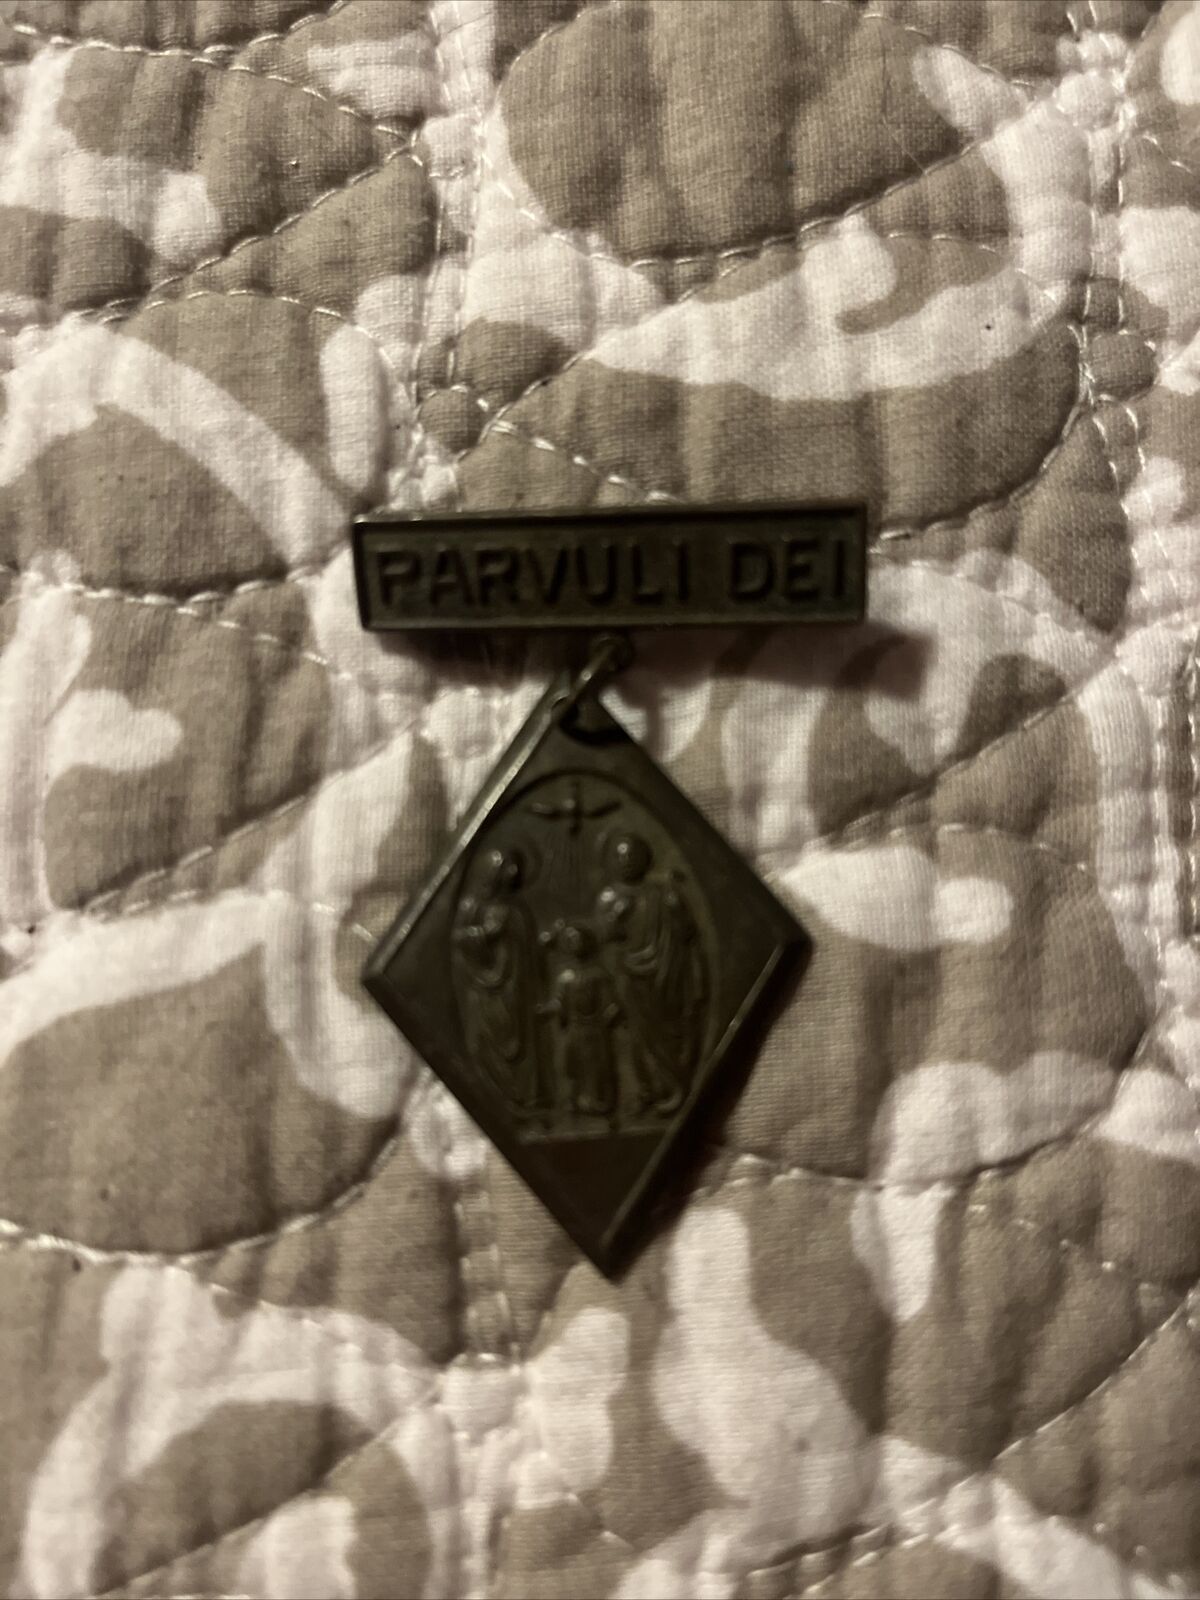 Religious Medallion Parvuli DRI  1950’s Boyscouts Of America Award